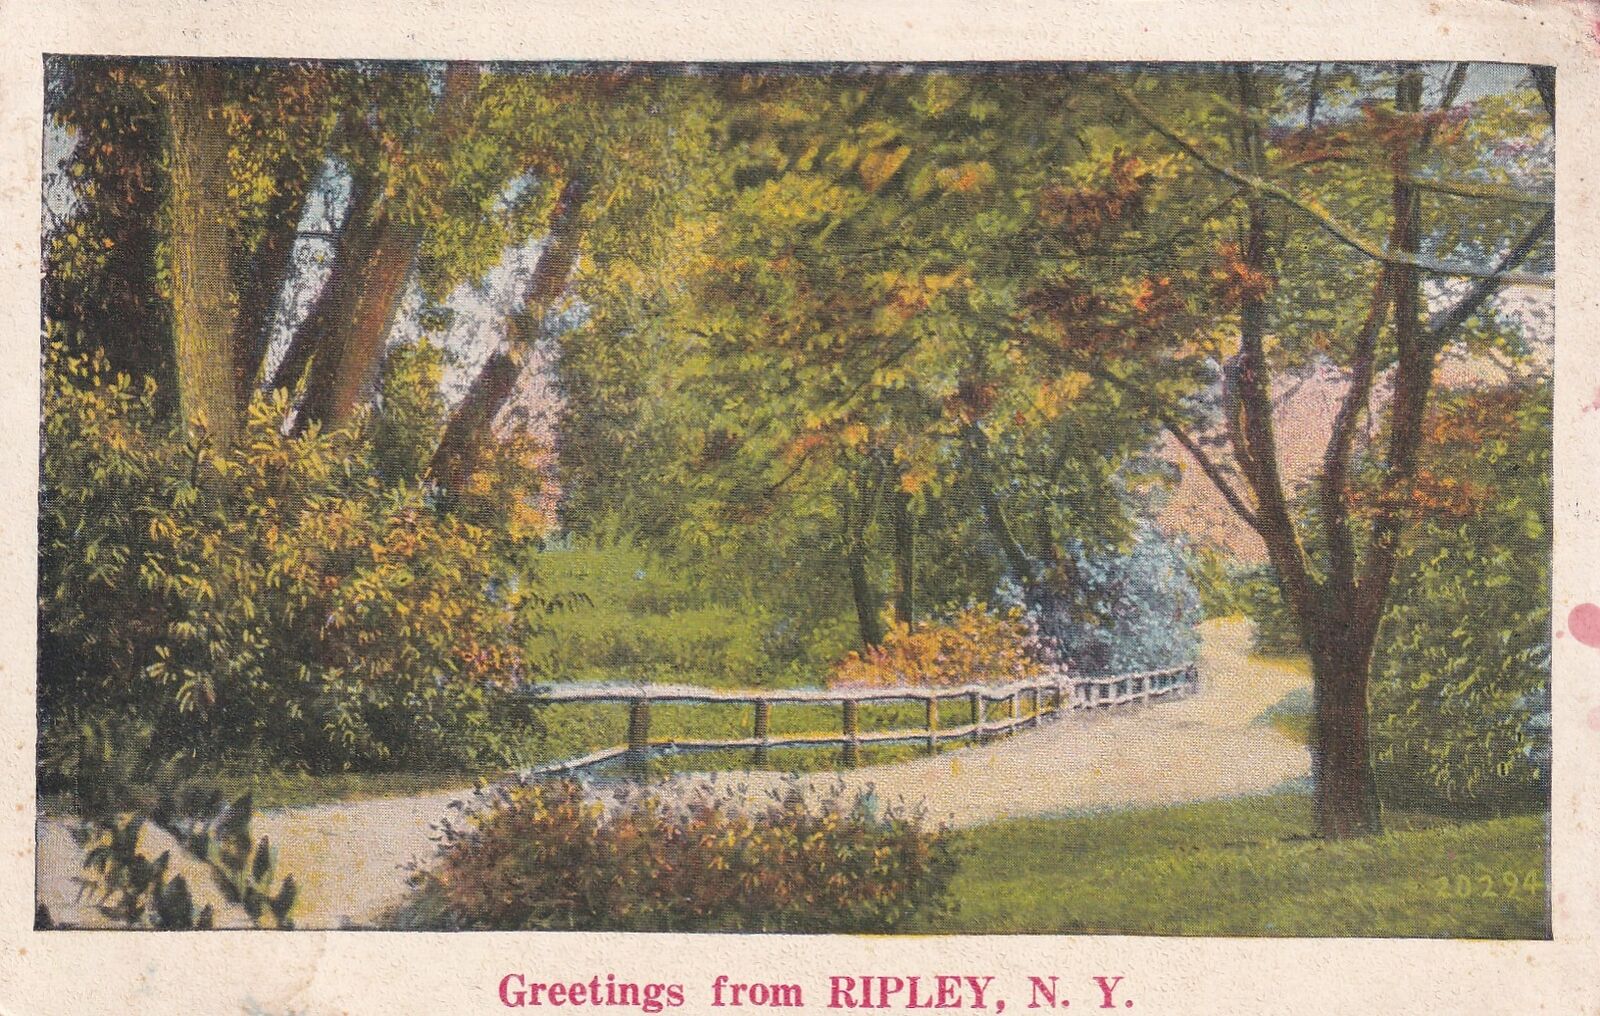 Ripley New York NY Greetings From 1934 to Caney KS Postcard C59